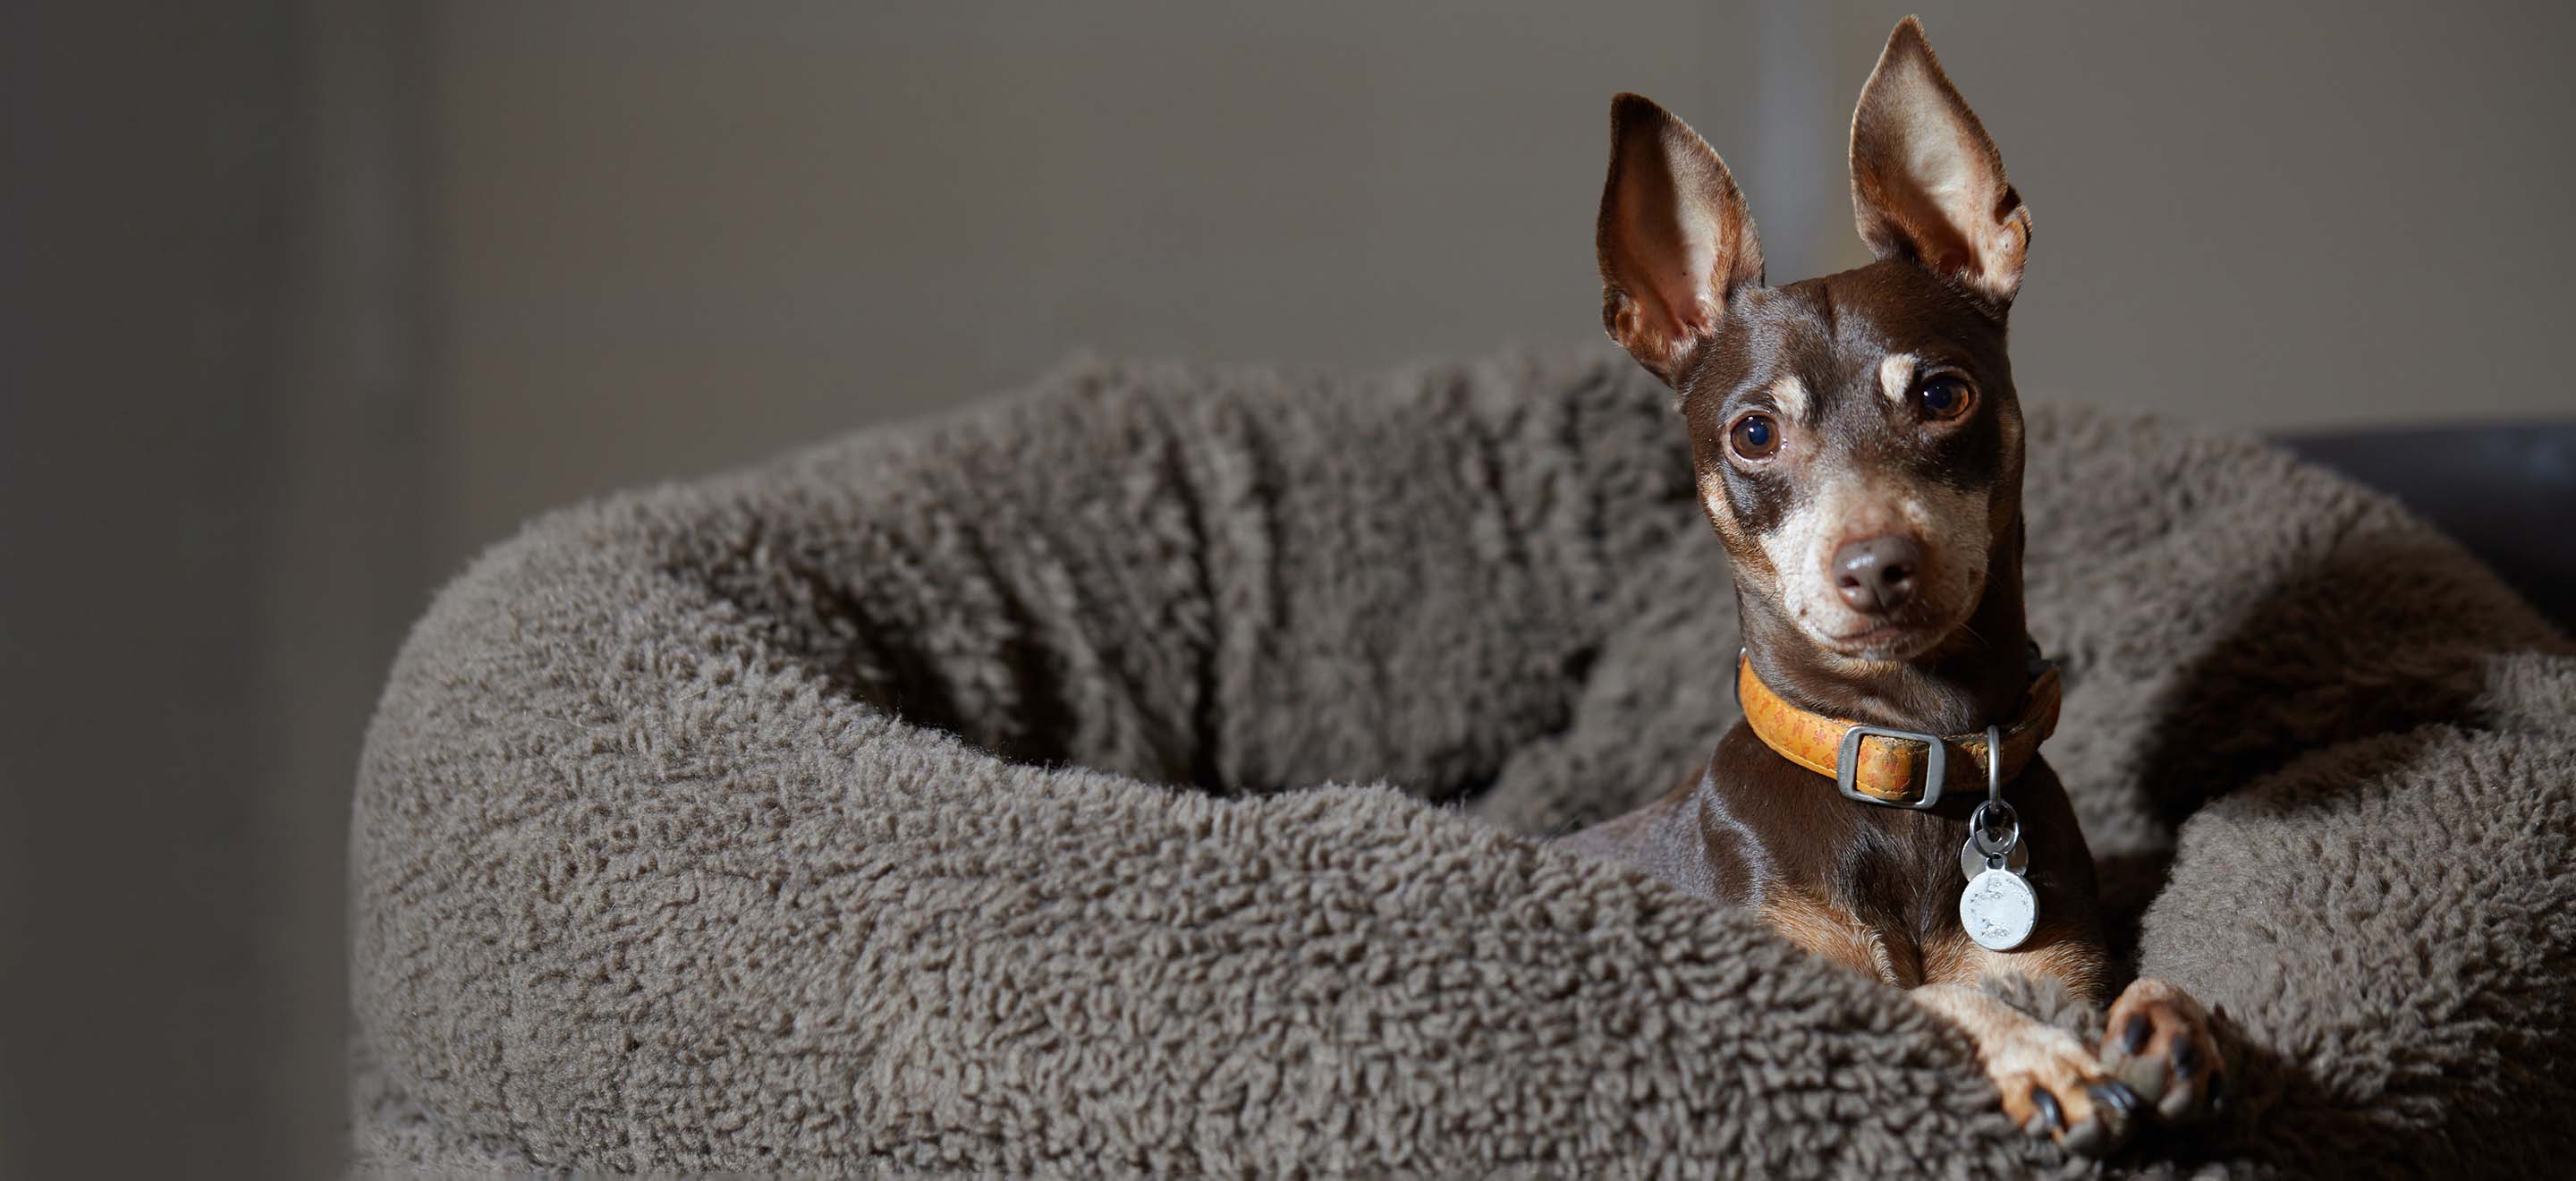 Miniature Pinscher dog sitting comfy in a dark gray dog bed image